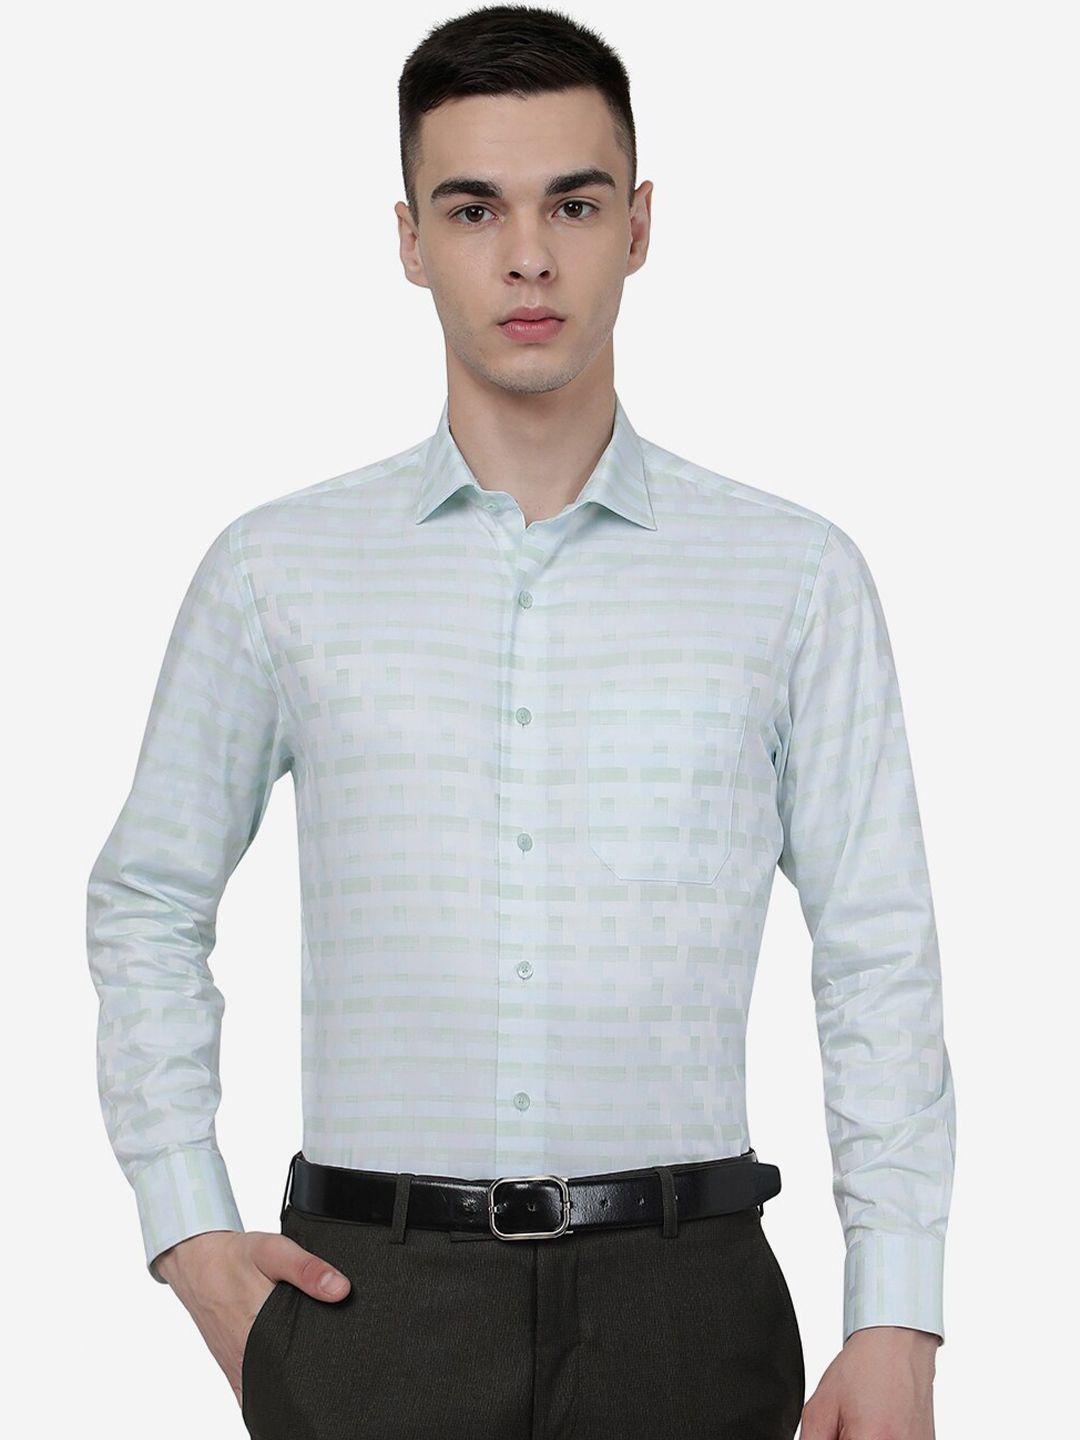 metal-slim-fit-geometric-printed-opaque-striped-formal-shirt